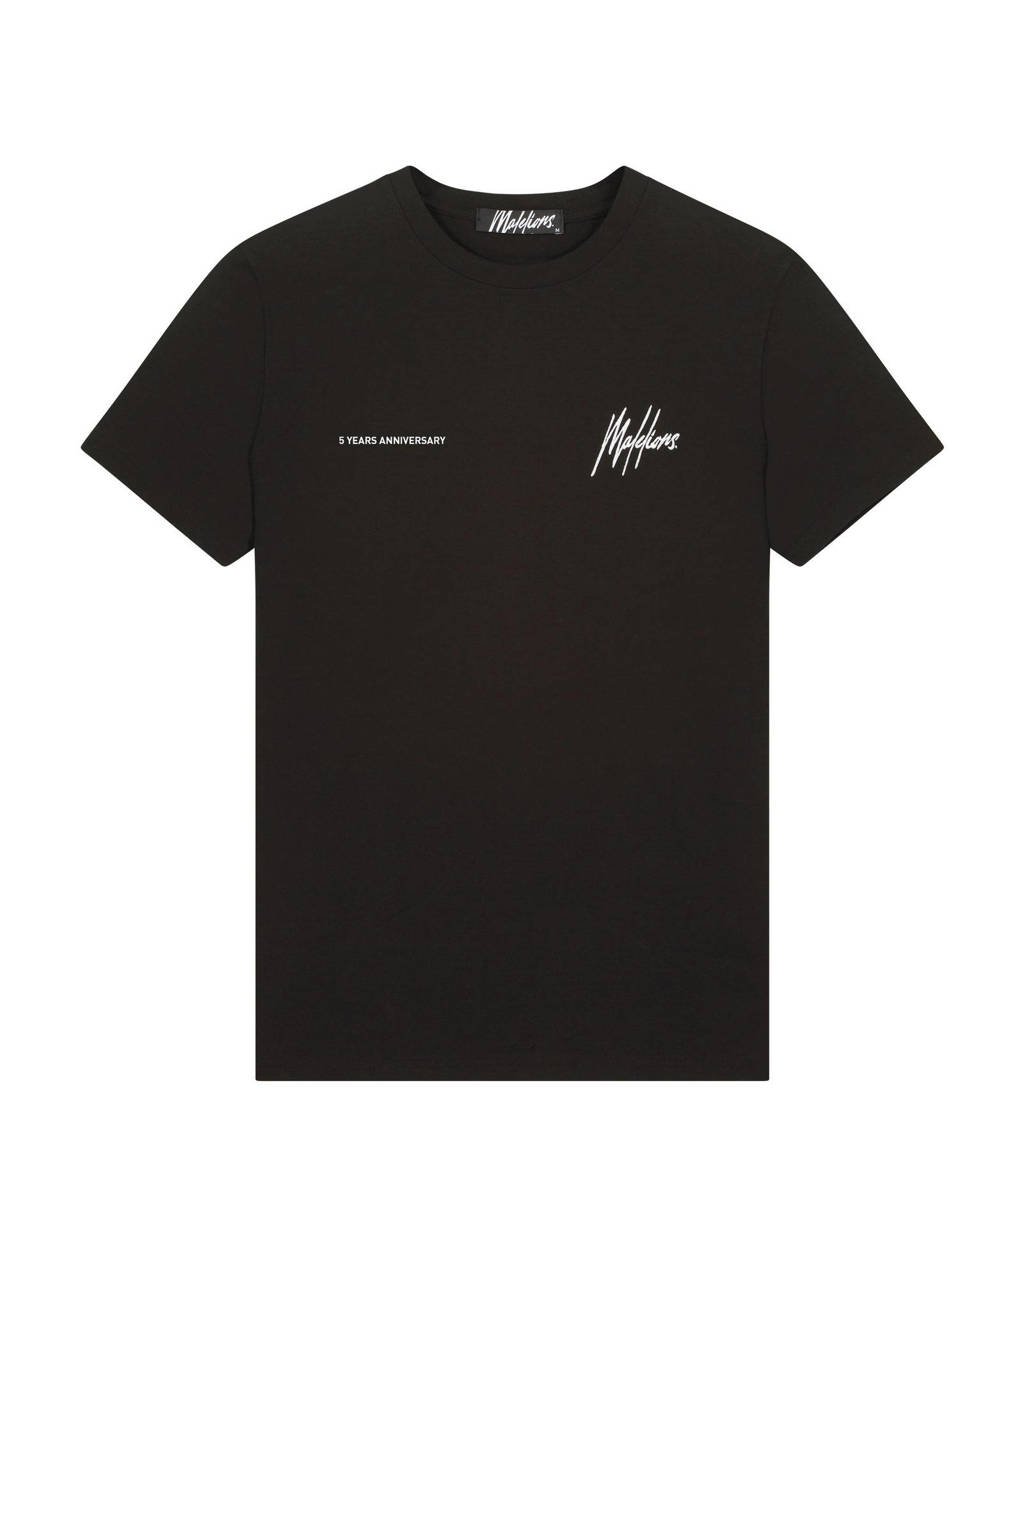 Malelions regular fit T-shirt black